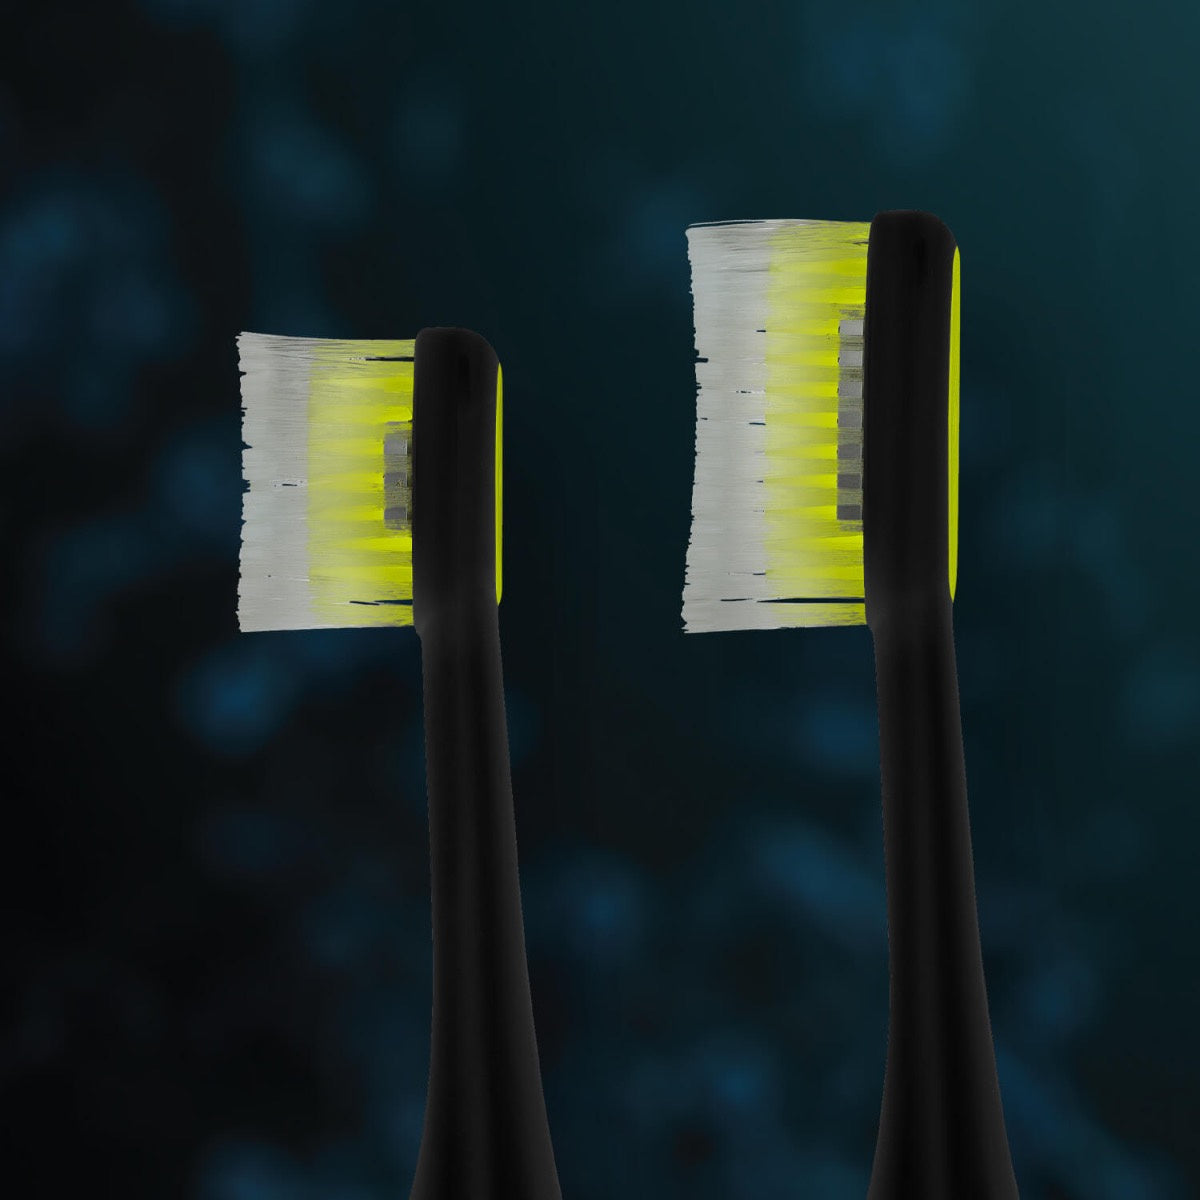 Toothbrush with DentalRF™ technology, Silkn ToothWave Black TW1PE3Z001